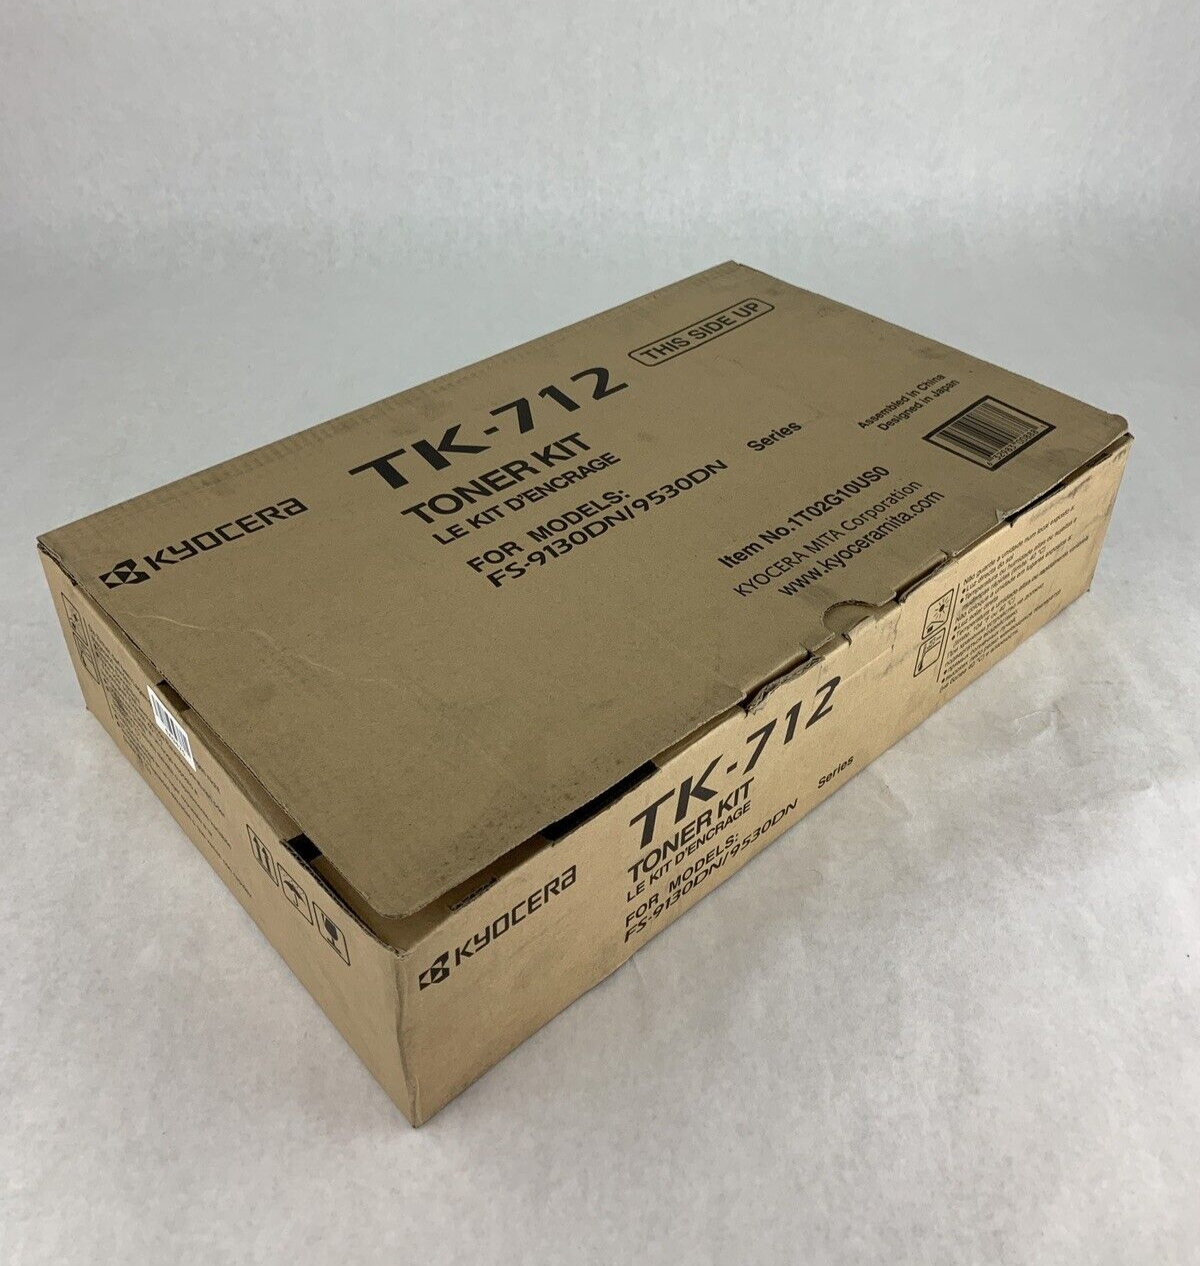 New Box Opened Kyocera TK-712 FS-9130DN/9530DN Black Toner Cartridge